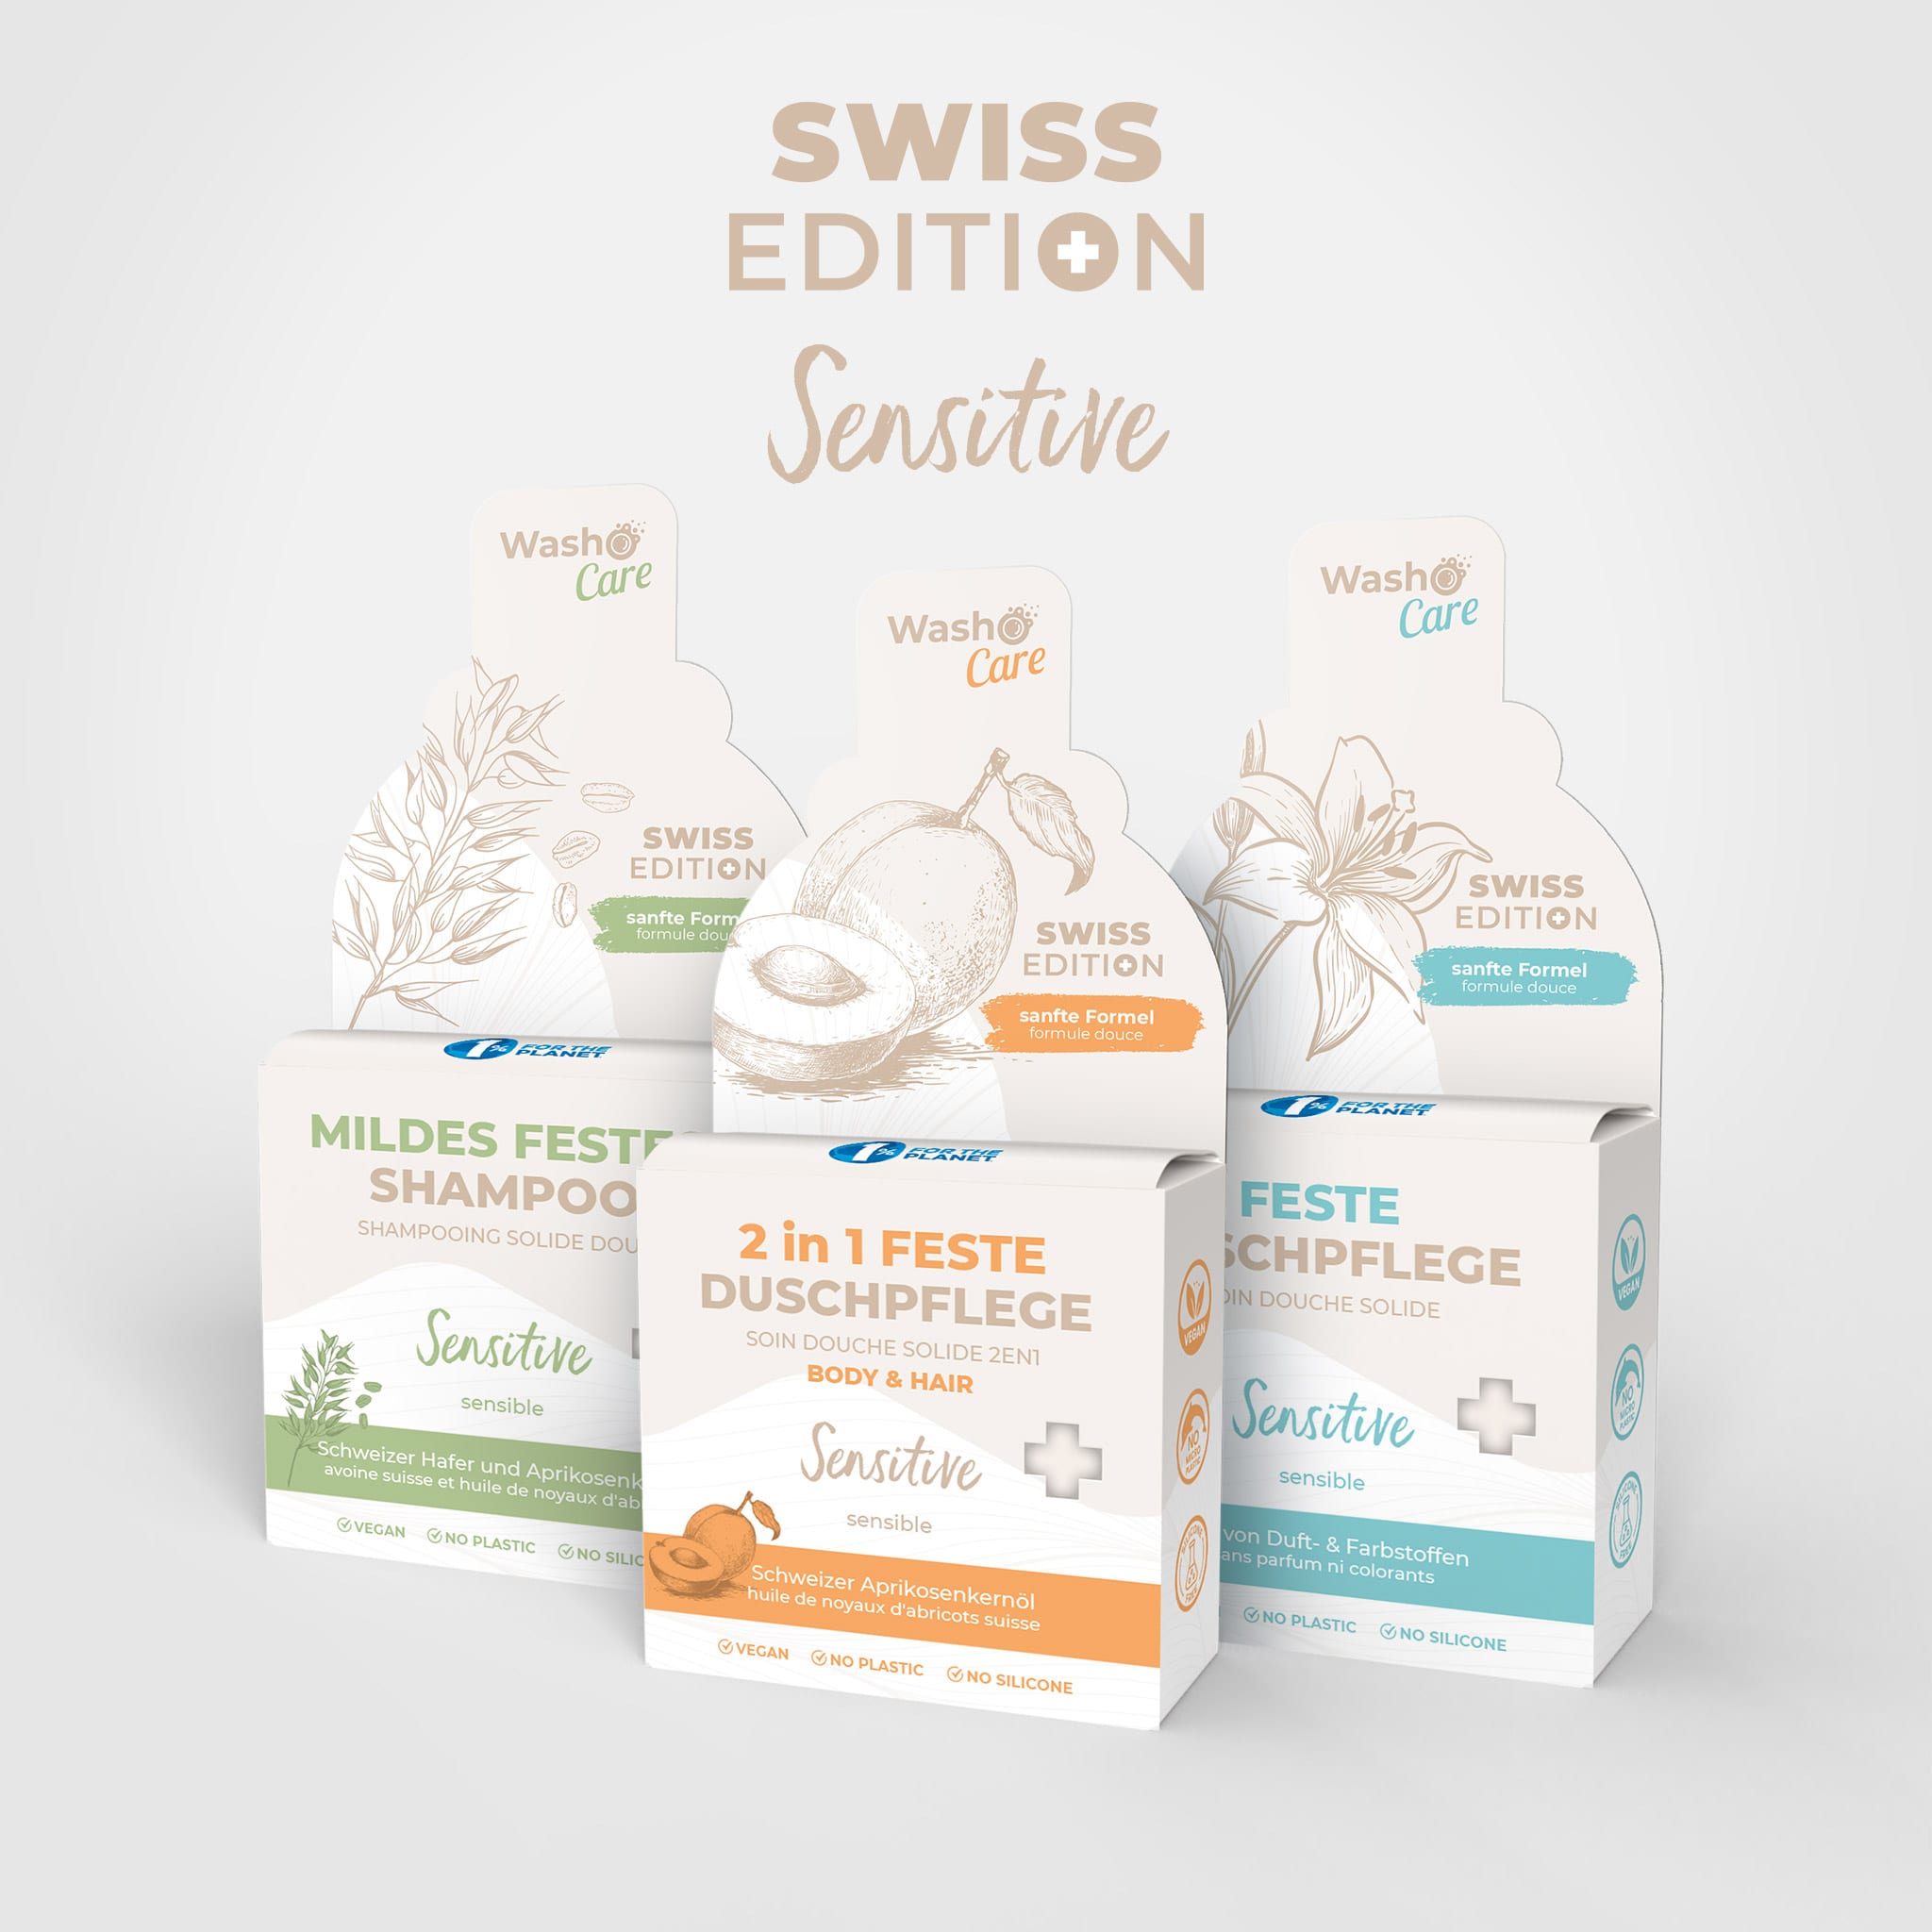 Washo Care Swiss Edition Set - washo.ch